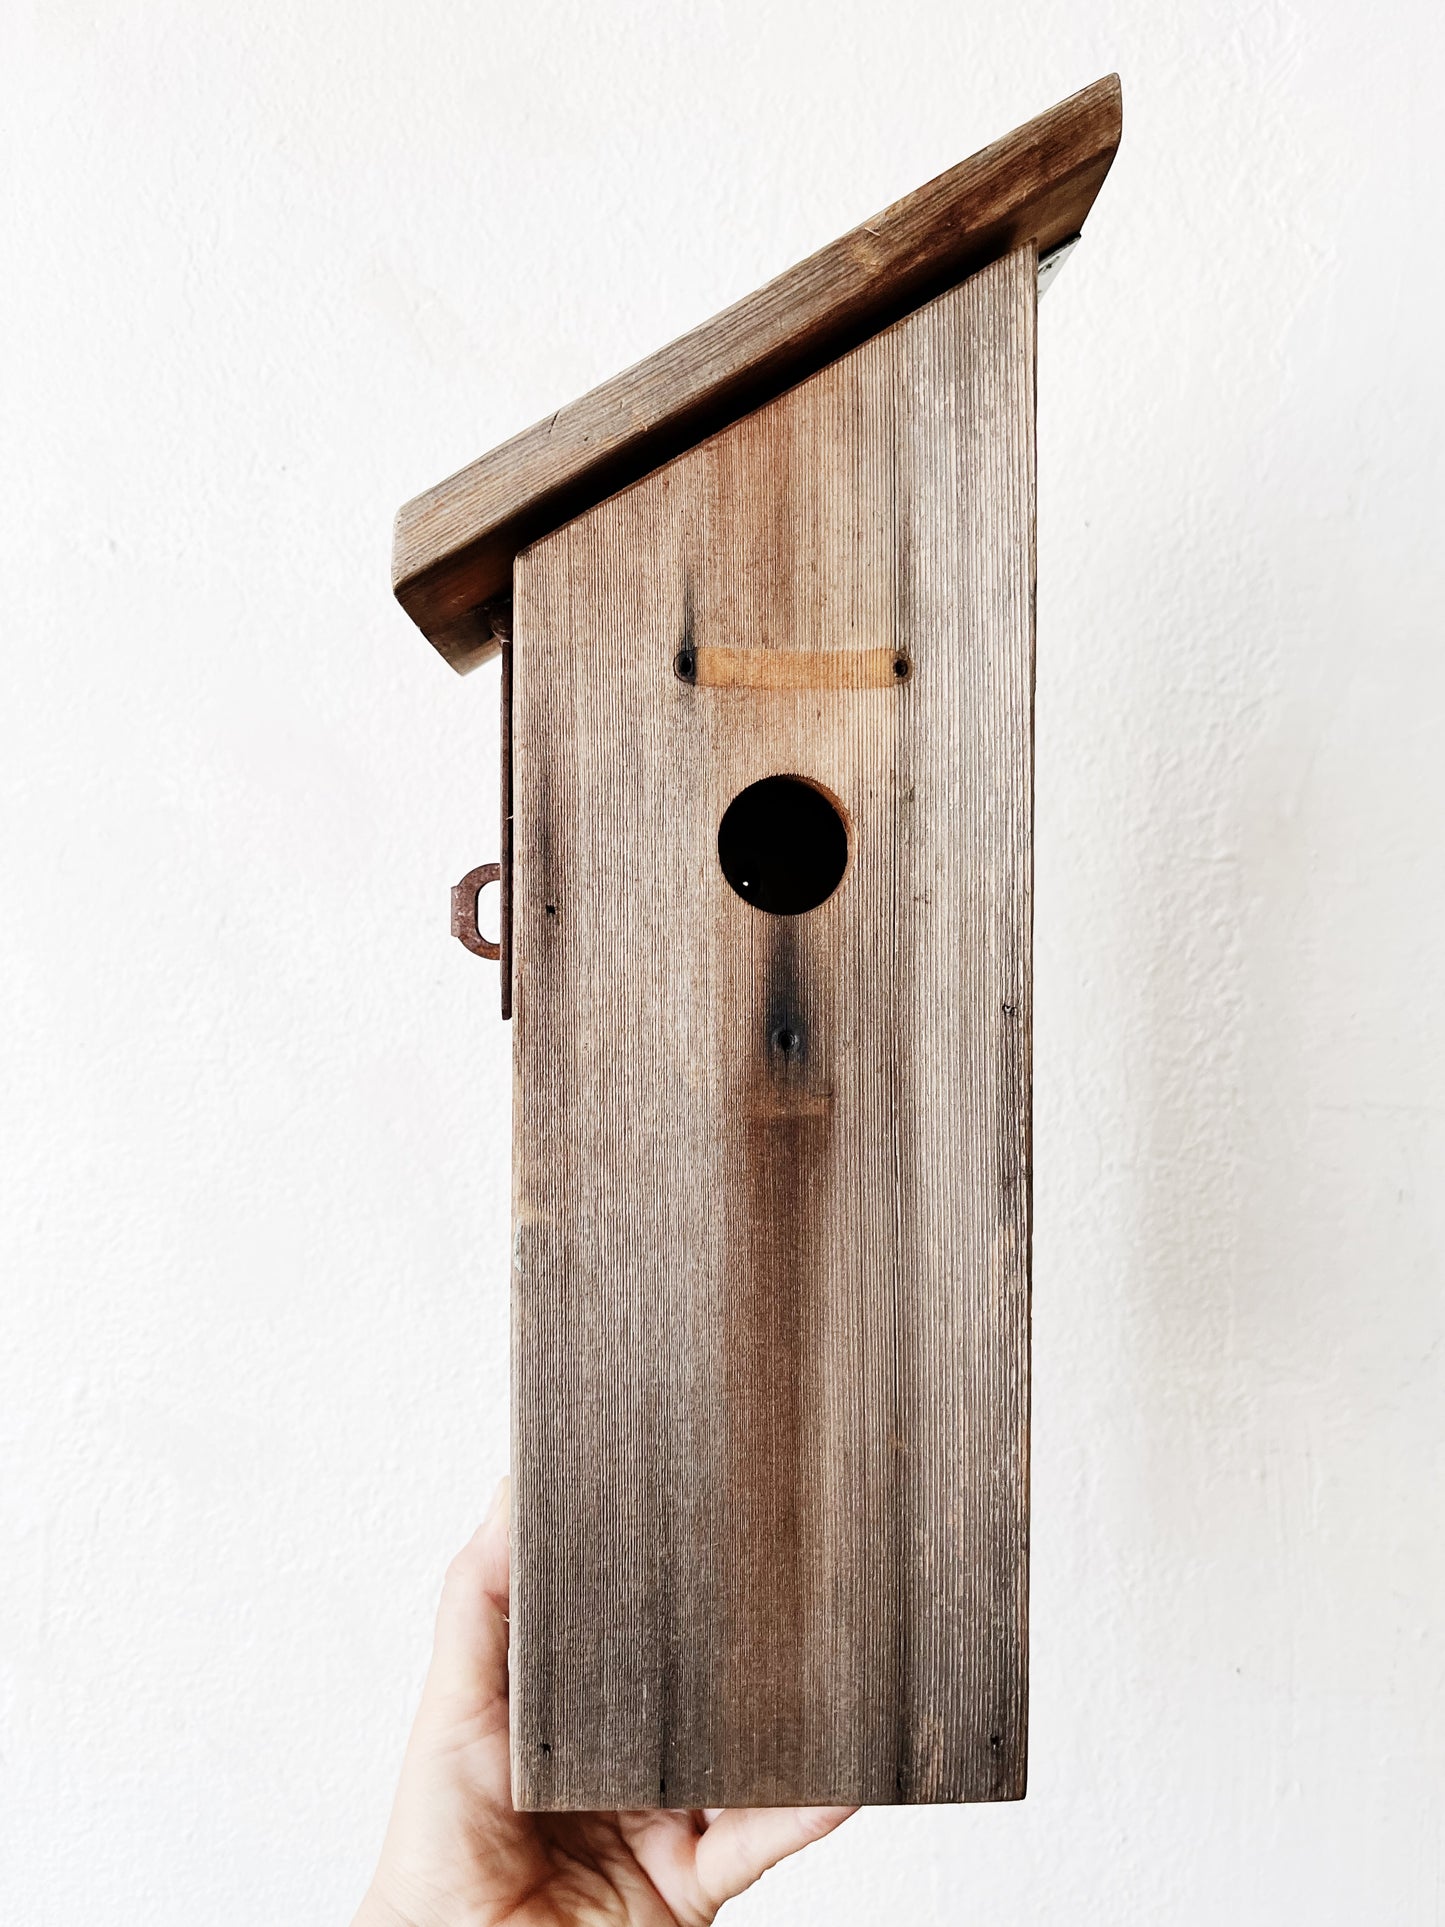 Handmade Bird House